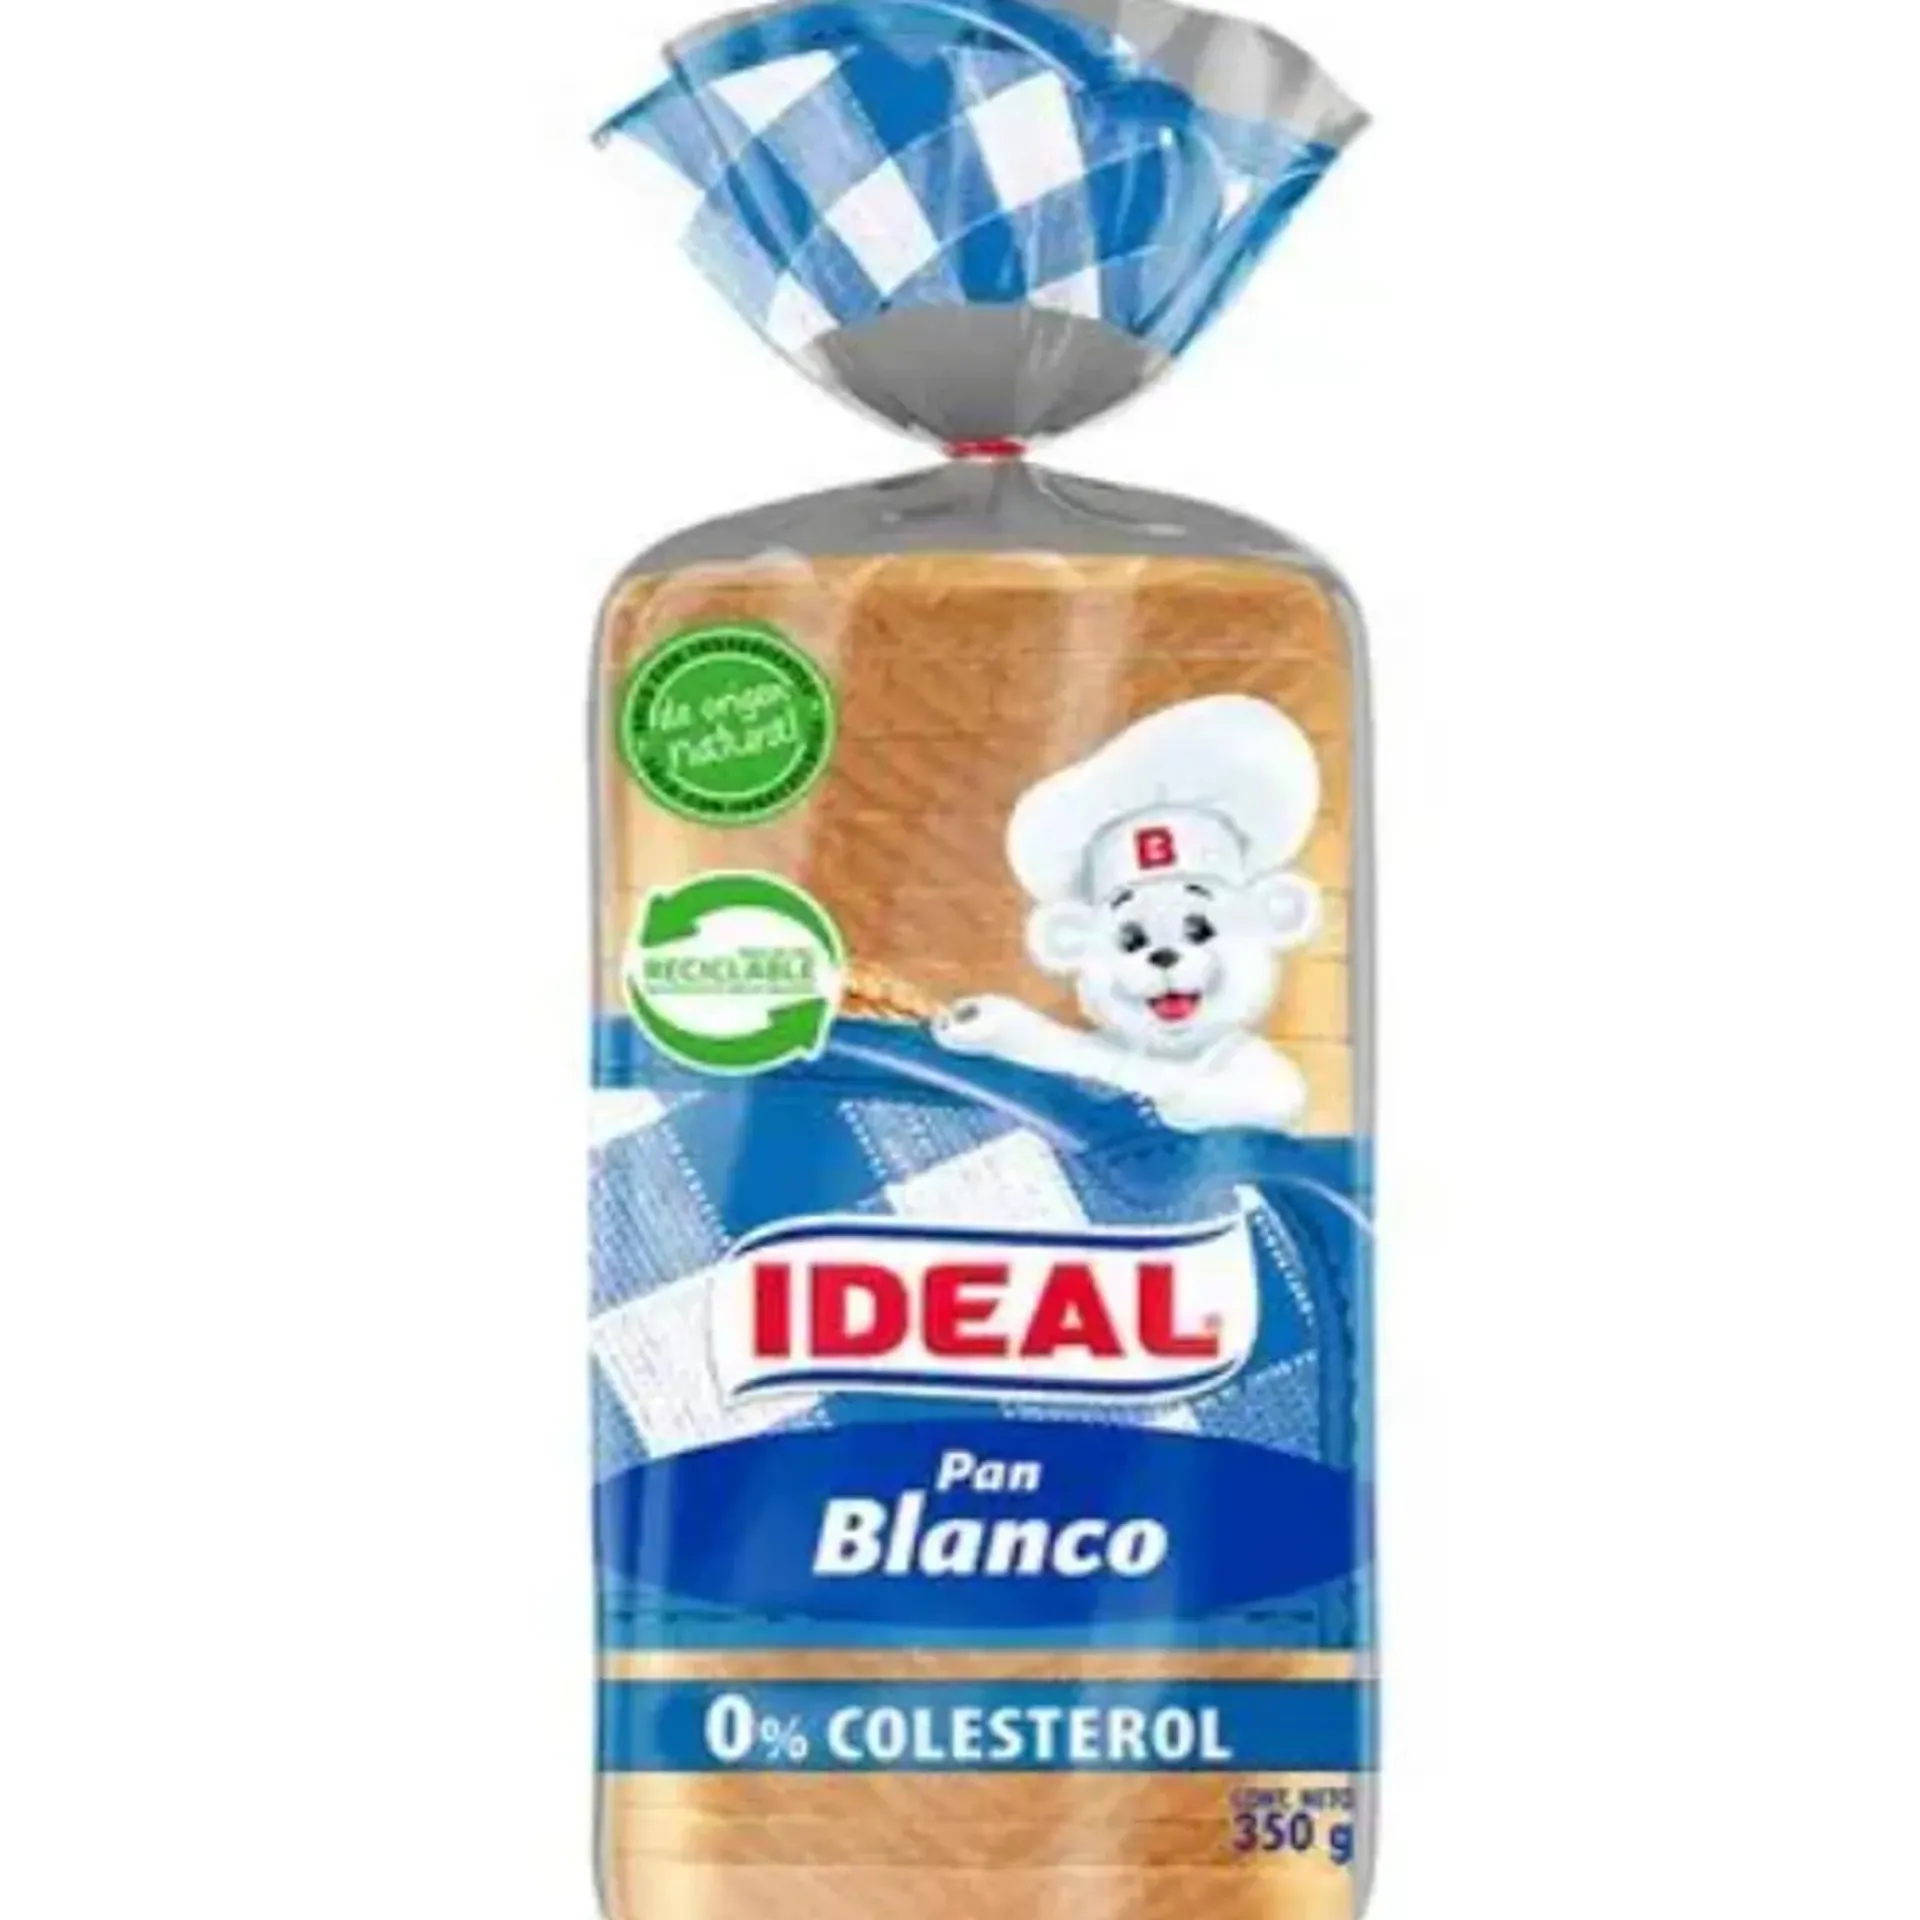 Pan Blanco Ideal 350 Grs